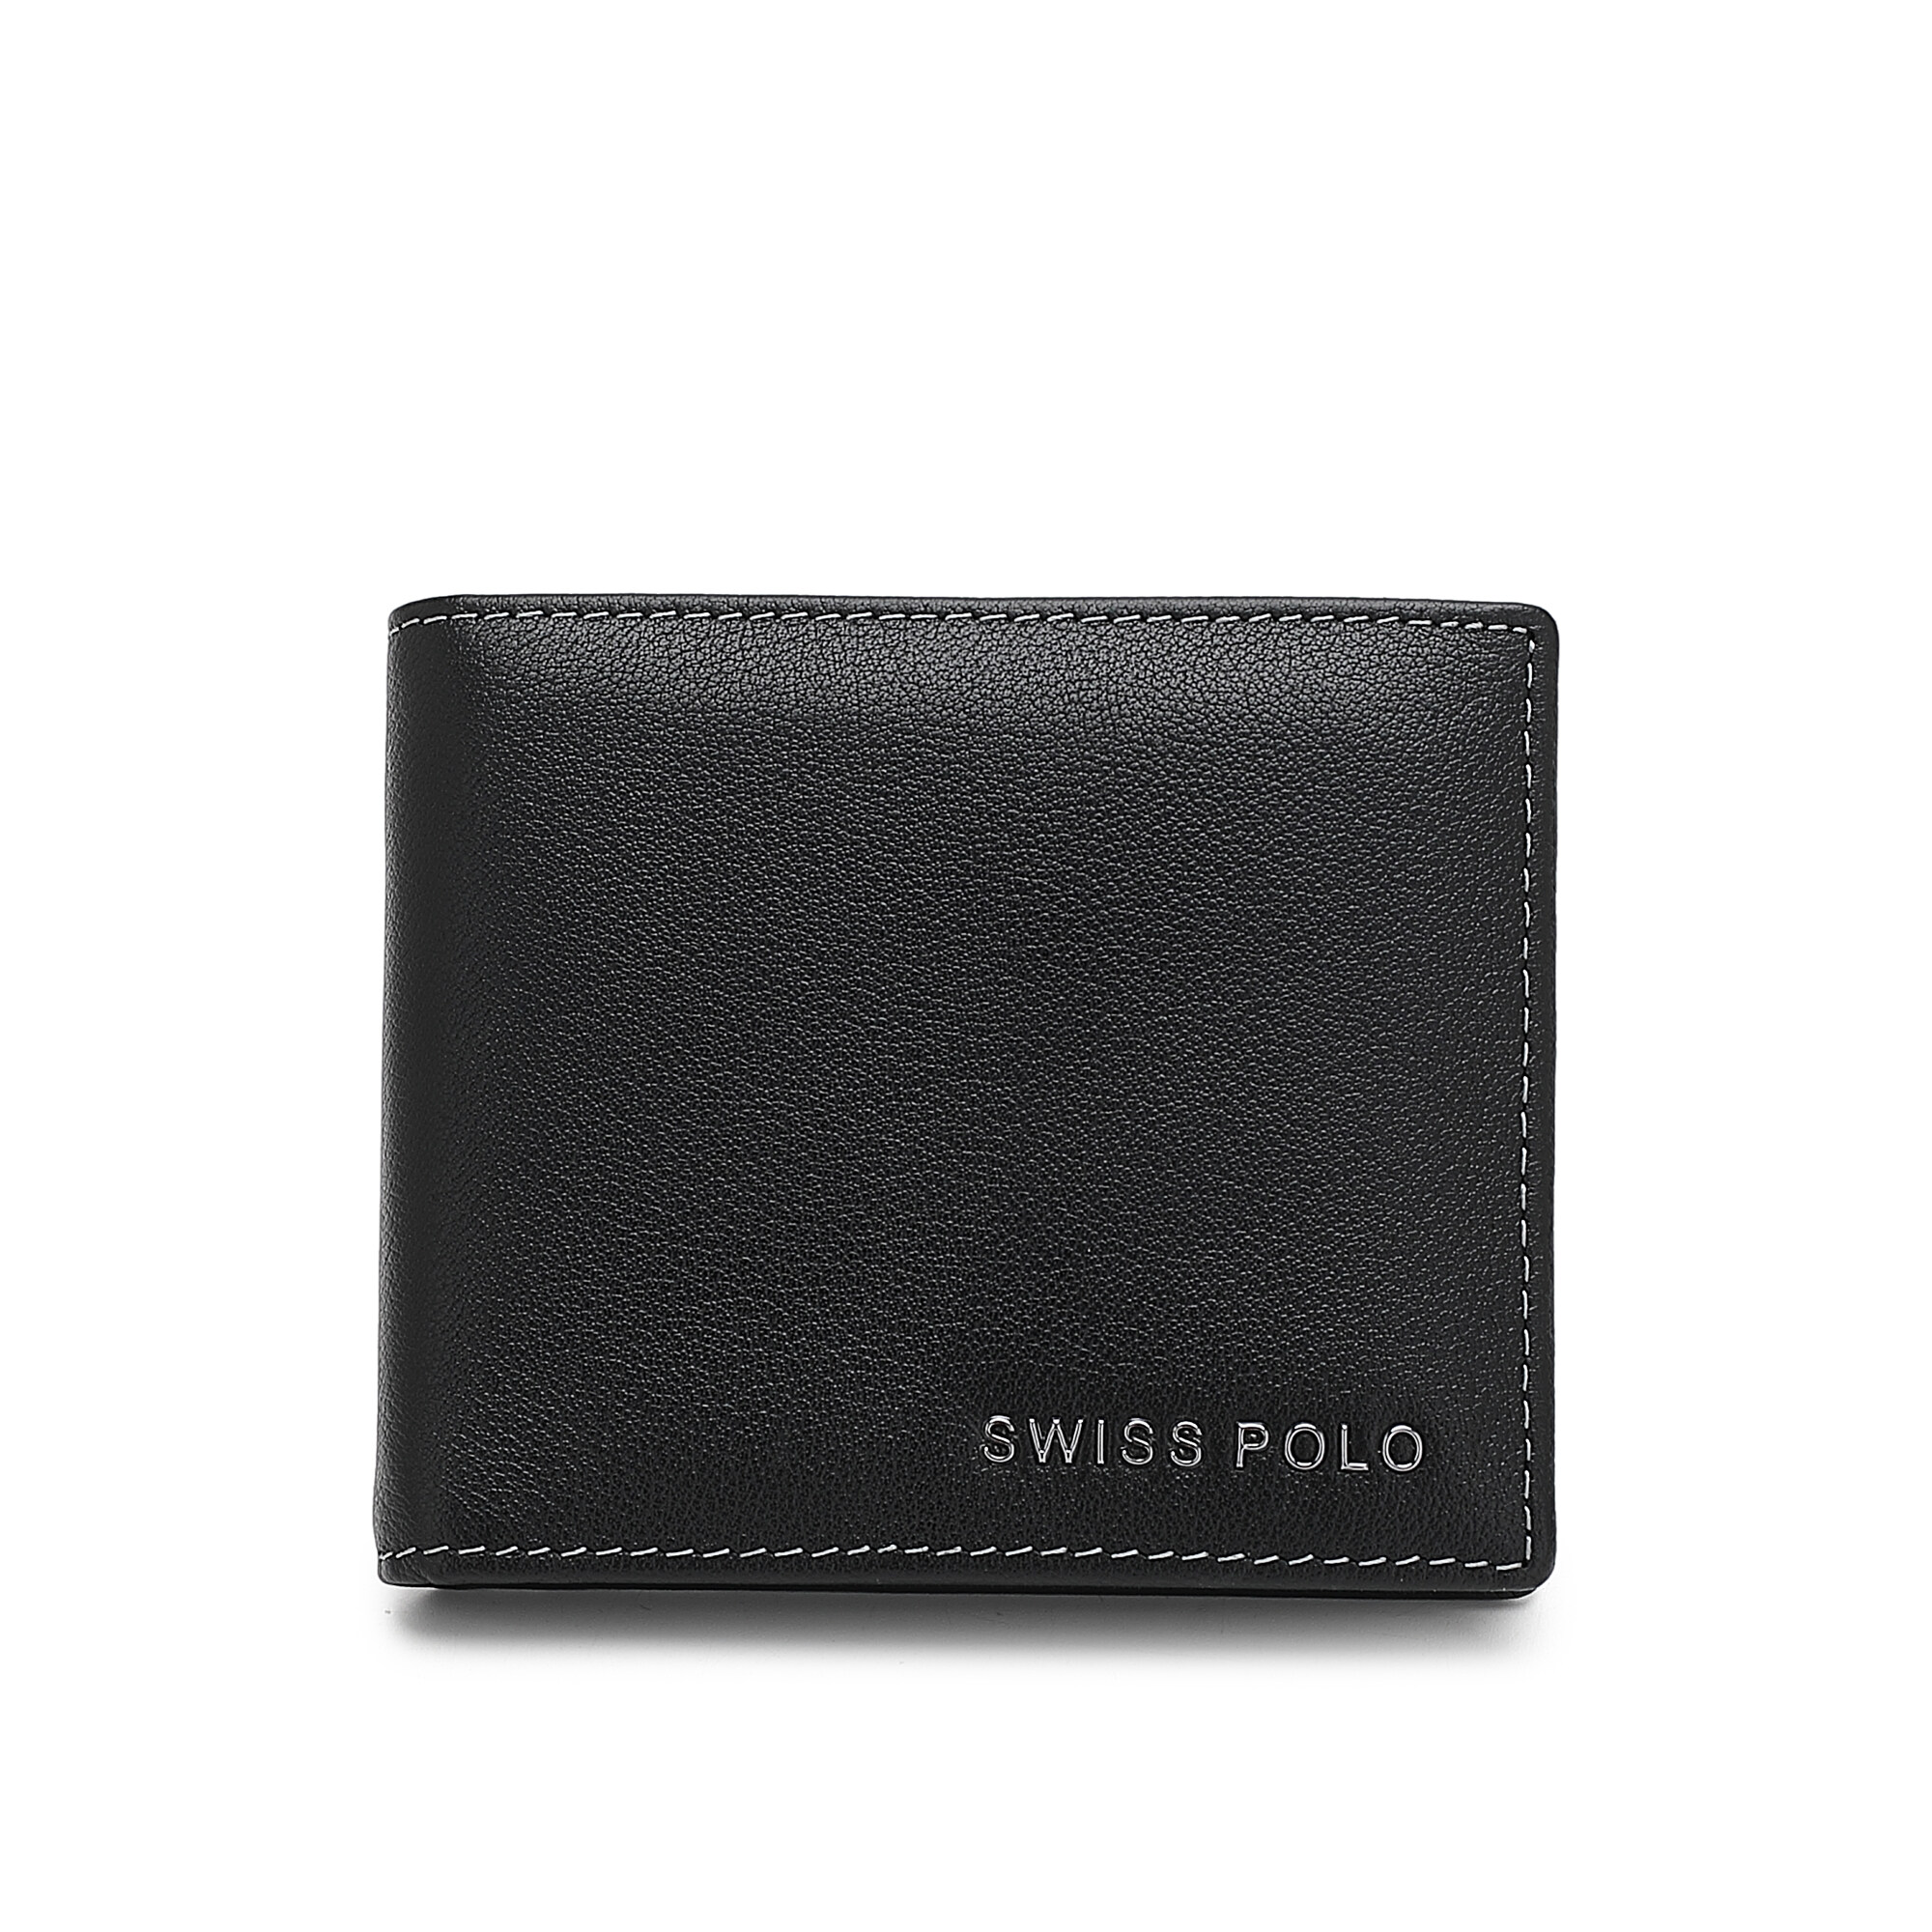 SWISS POLO Genuine Leather RFID Short Wallet SW 196-5 BLACK